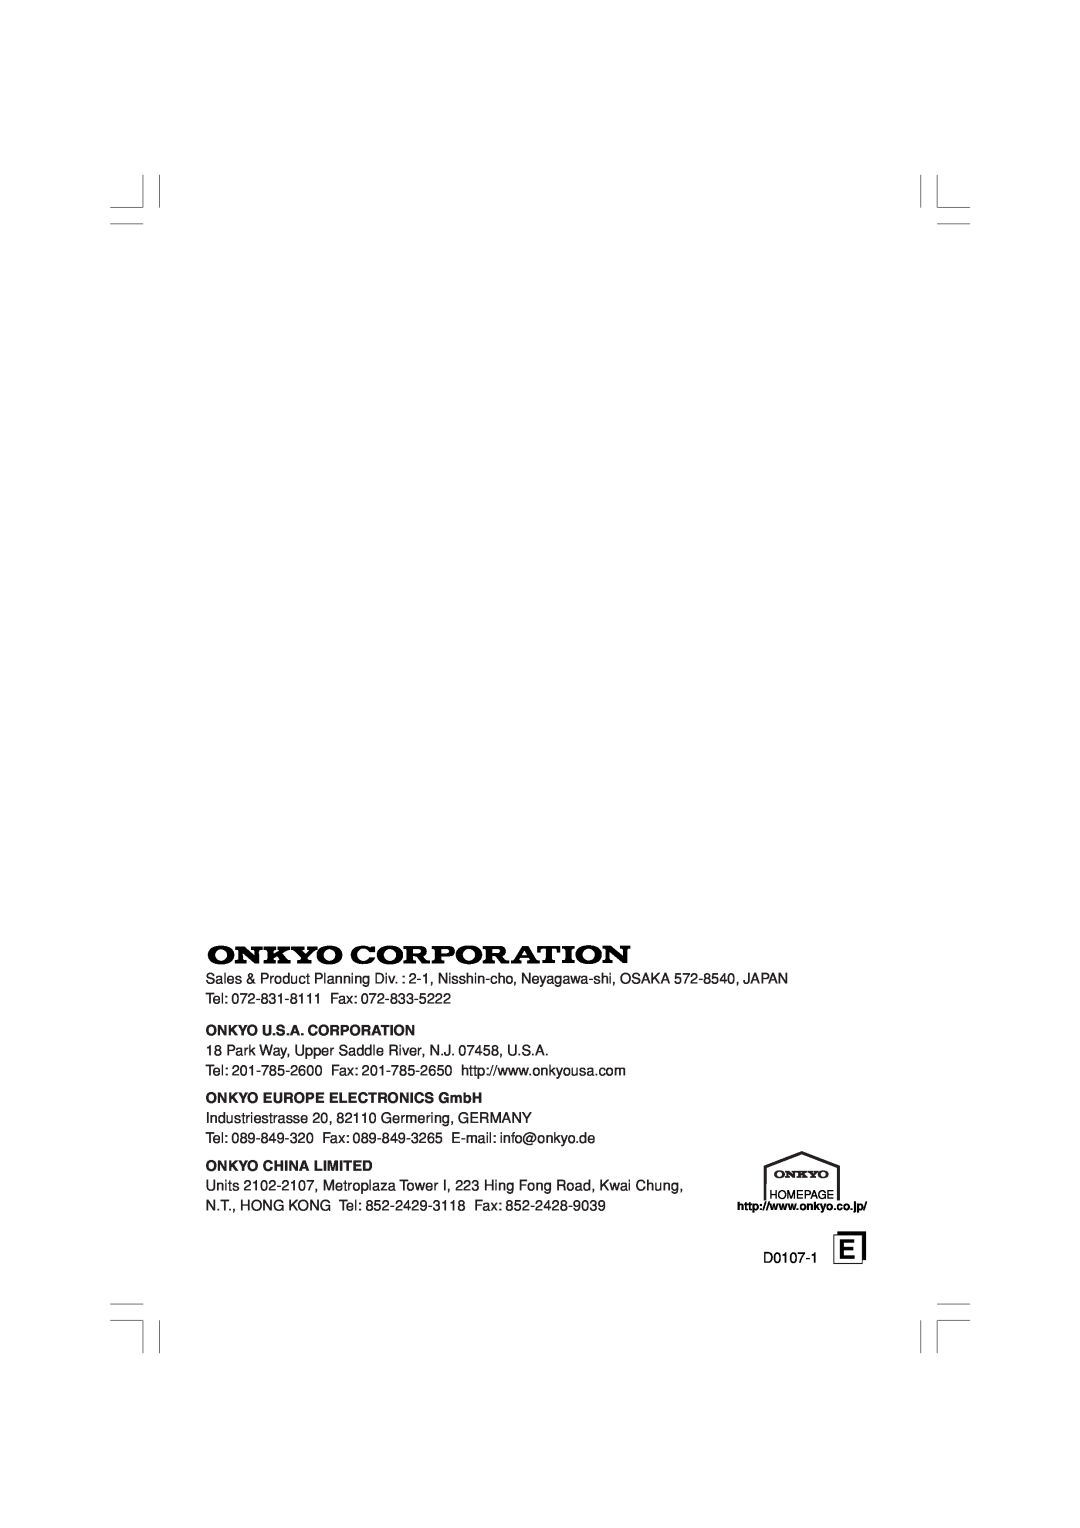 Onkyo RFR-5 instruction manual Onkyo U.S.A. Corporation, ONKYO EUROPE ELECTRONICS GmbH, Onkyo China Limited 